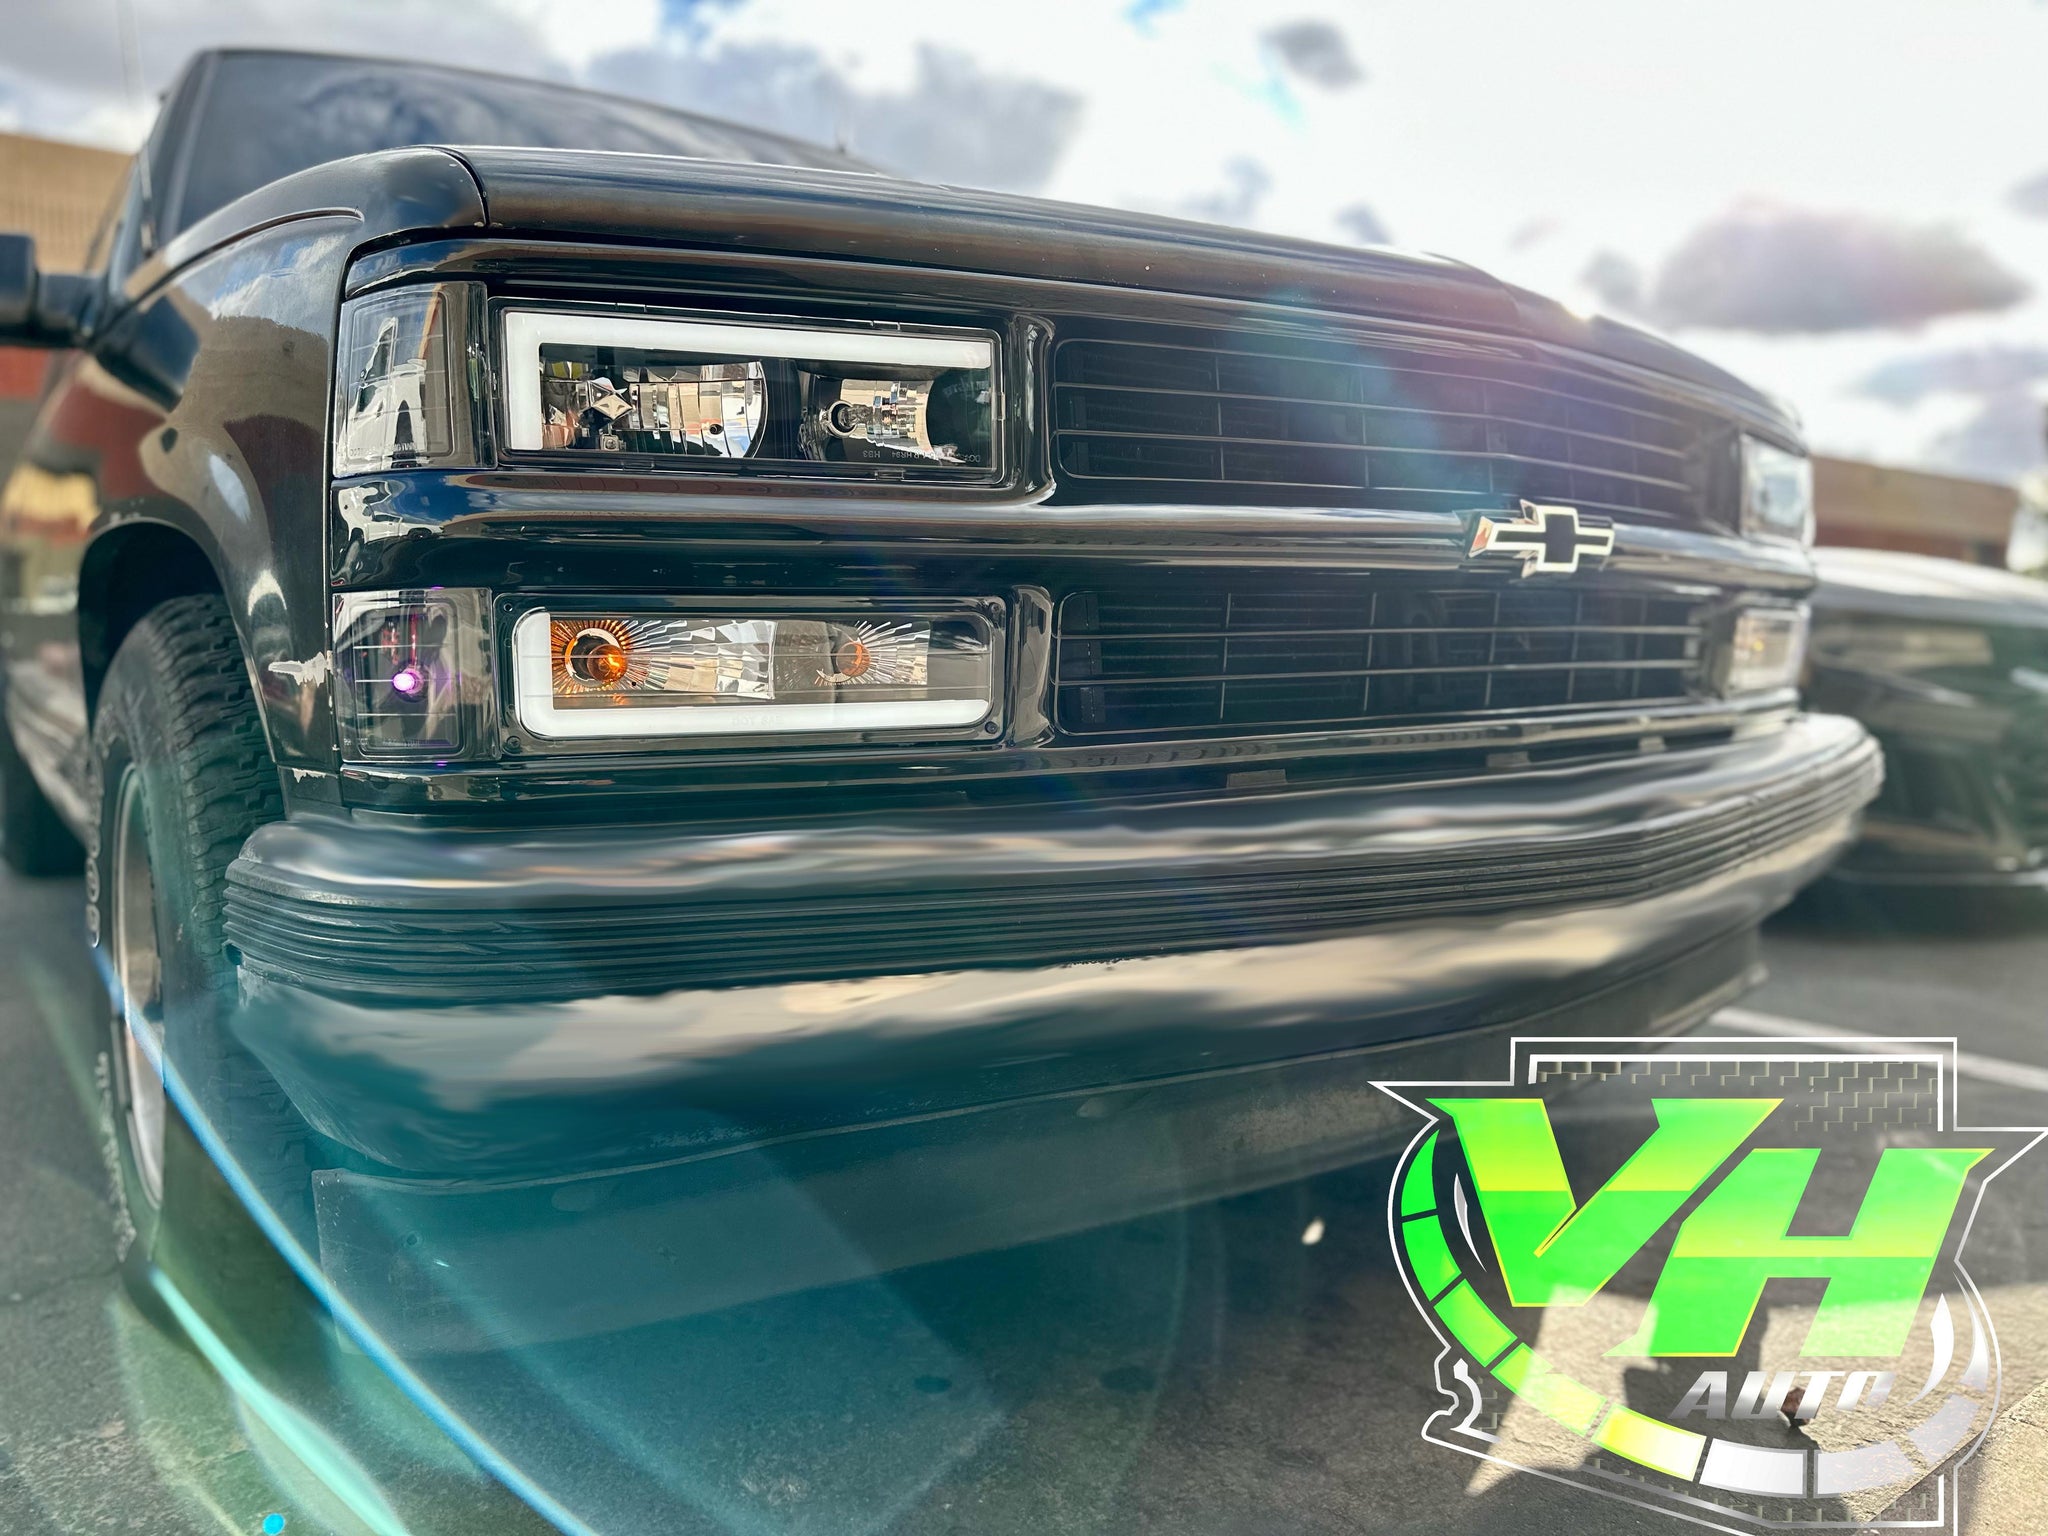 03-06 LED Chevy Silverado Bowtie “Style 1” Emblem – VH Auto